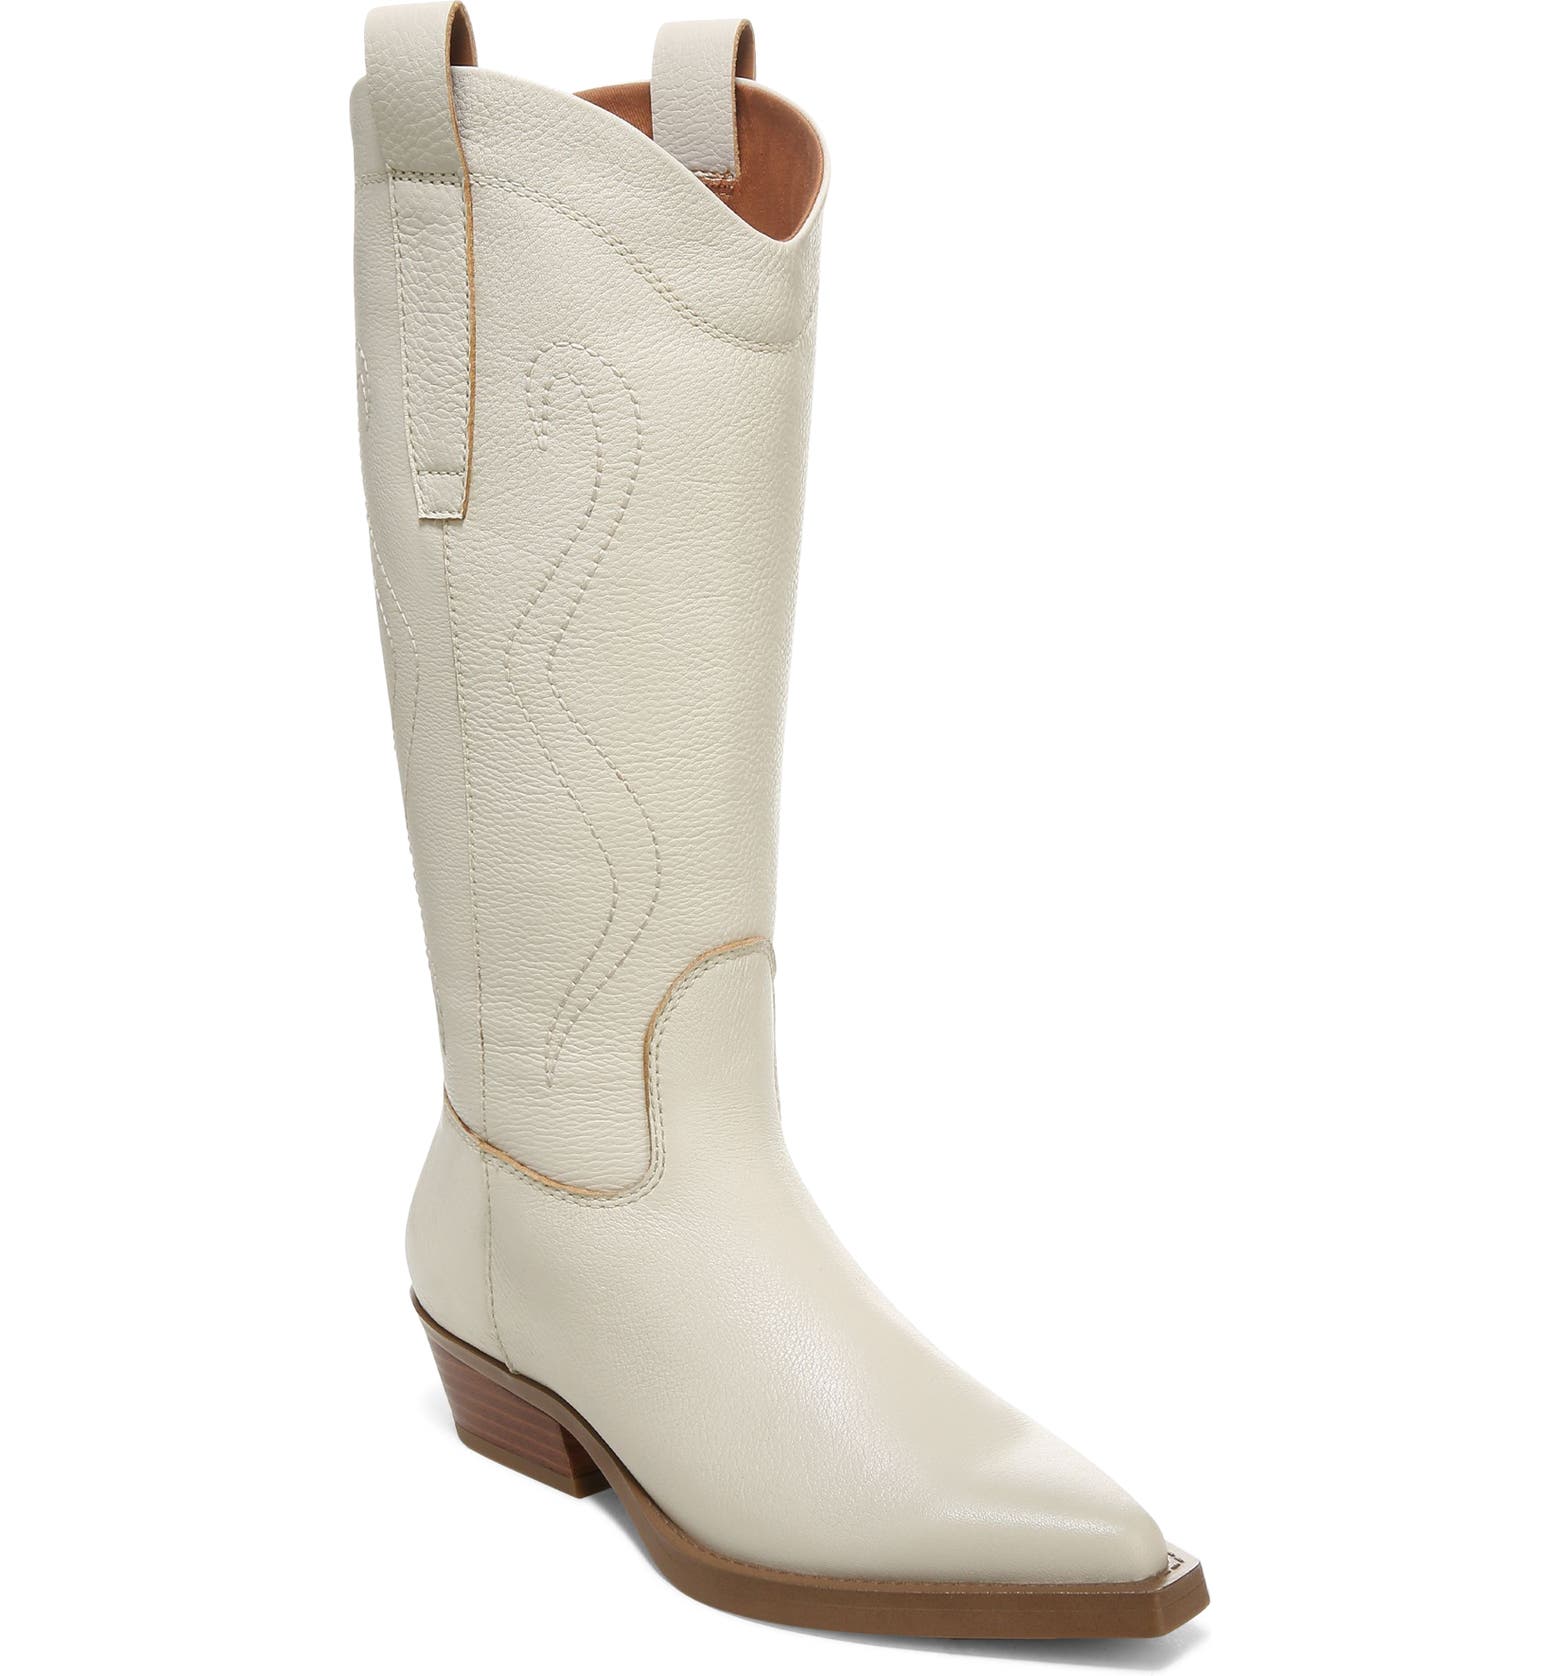 White Cowboy boots